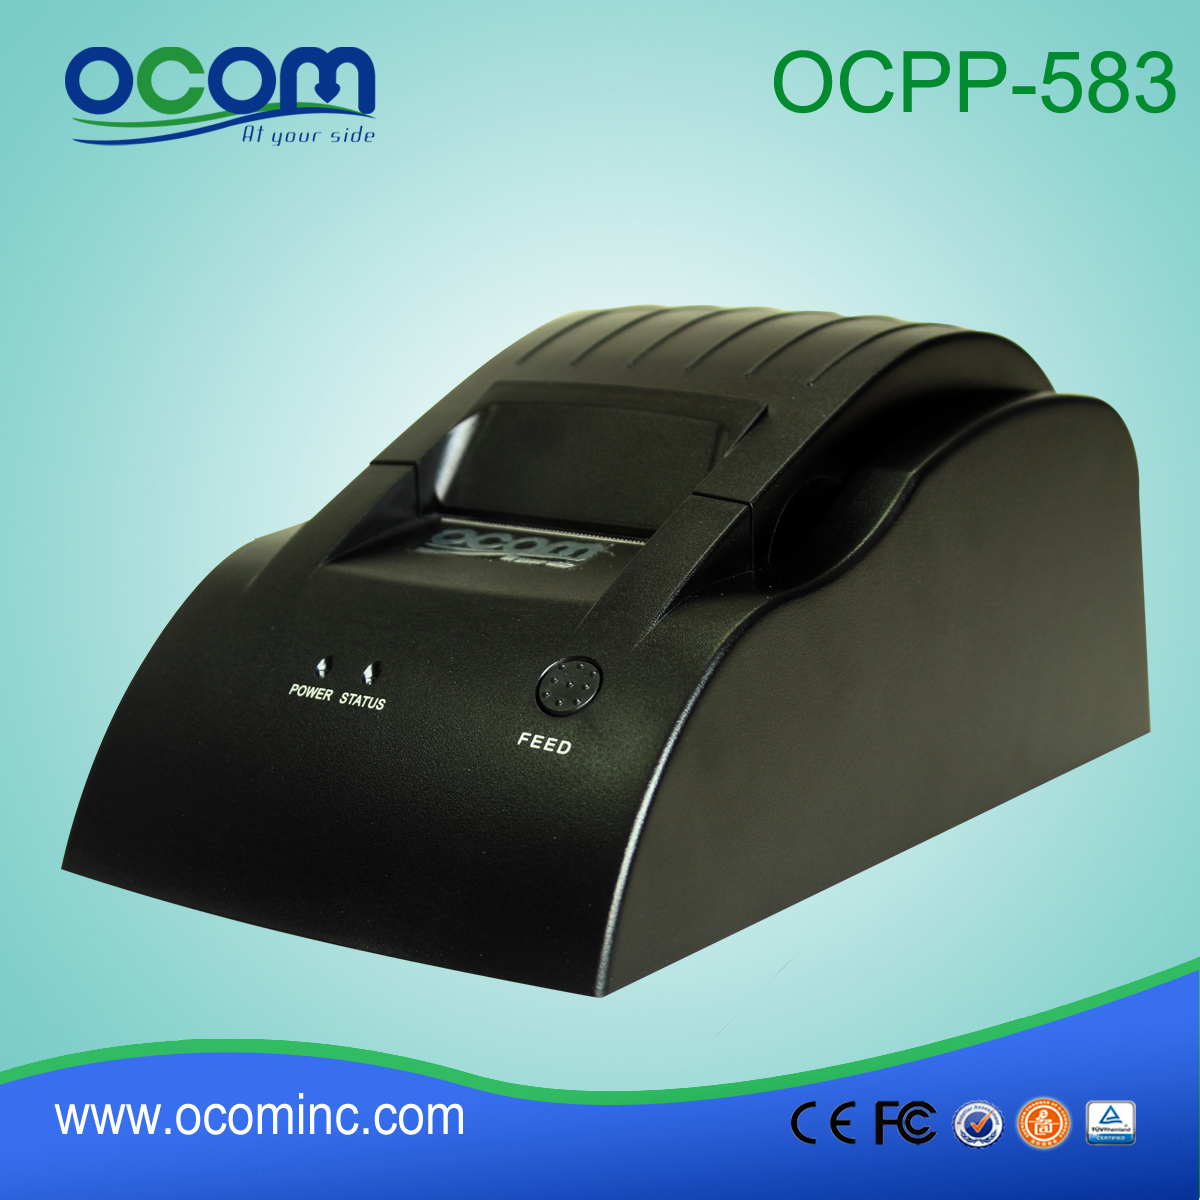 OCPP-583: 2015 τιμή άμεσης θερμικό εκτυπωτή, θερμικό εκτυπωτή POS